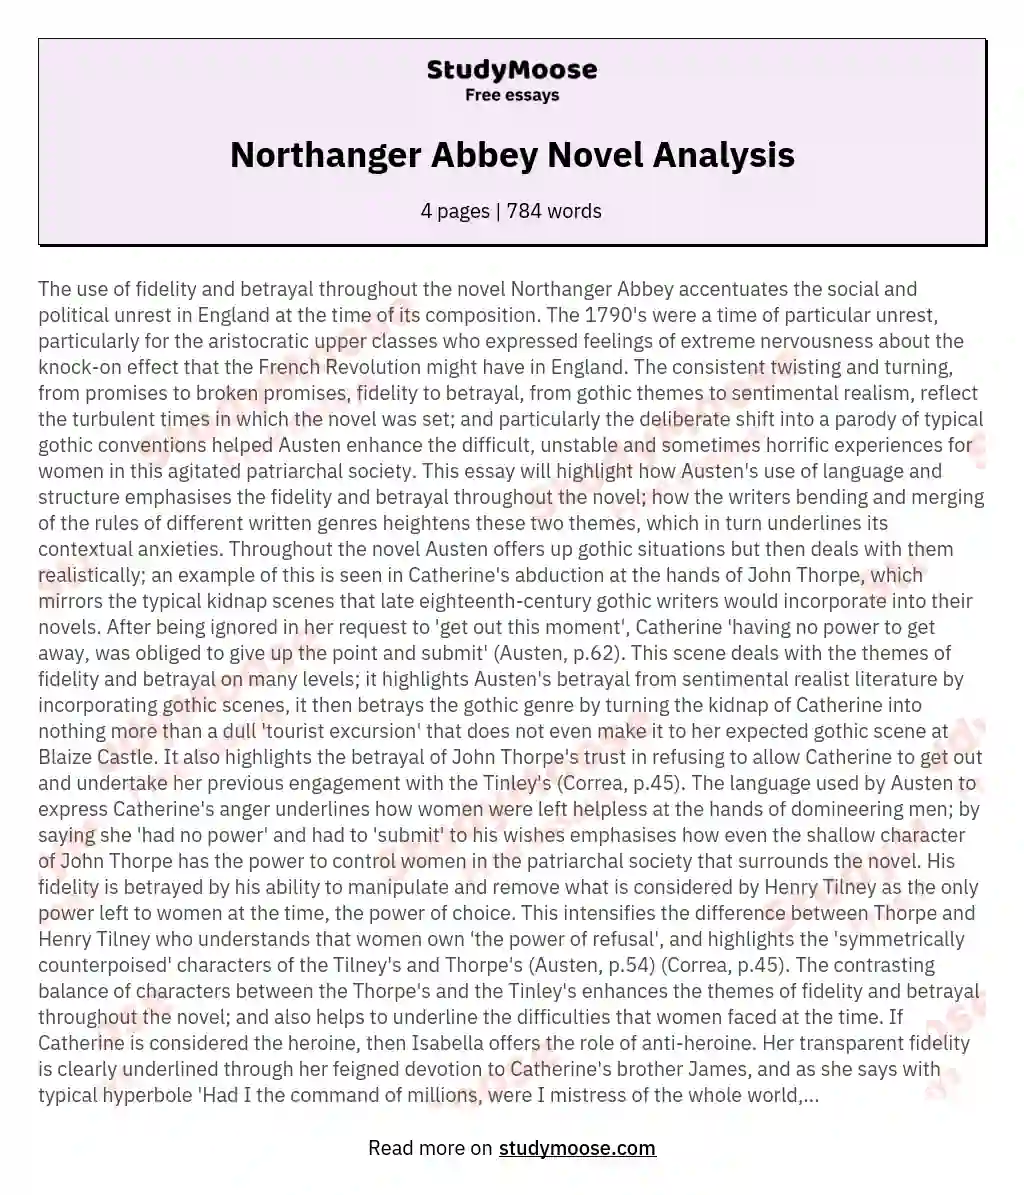 Northanger Abbey Novel Analysis essay